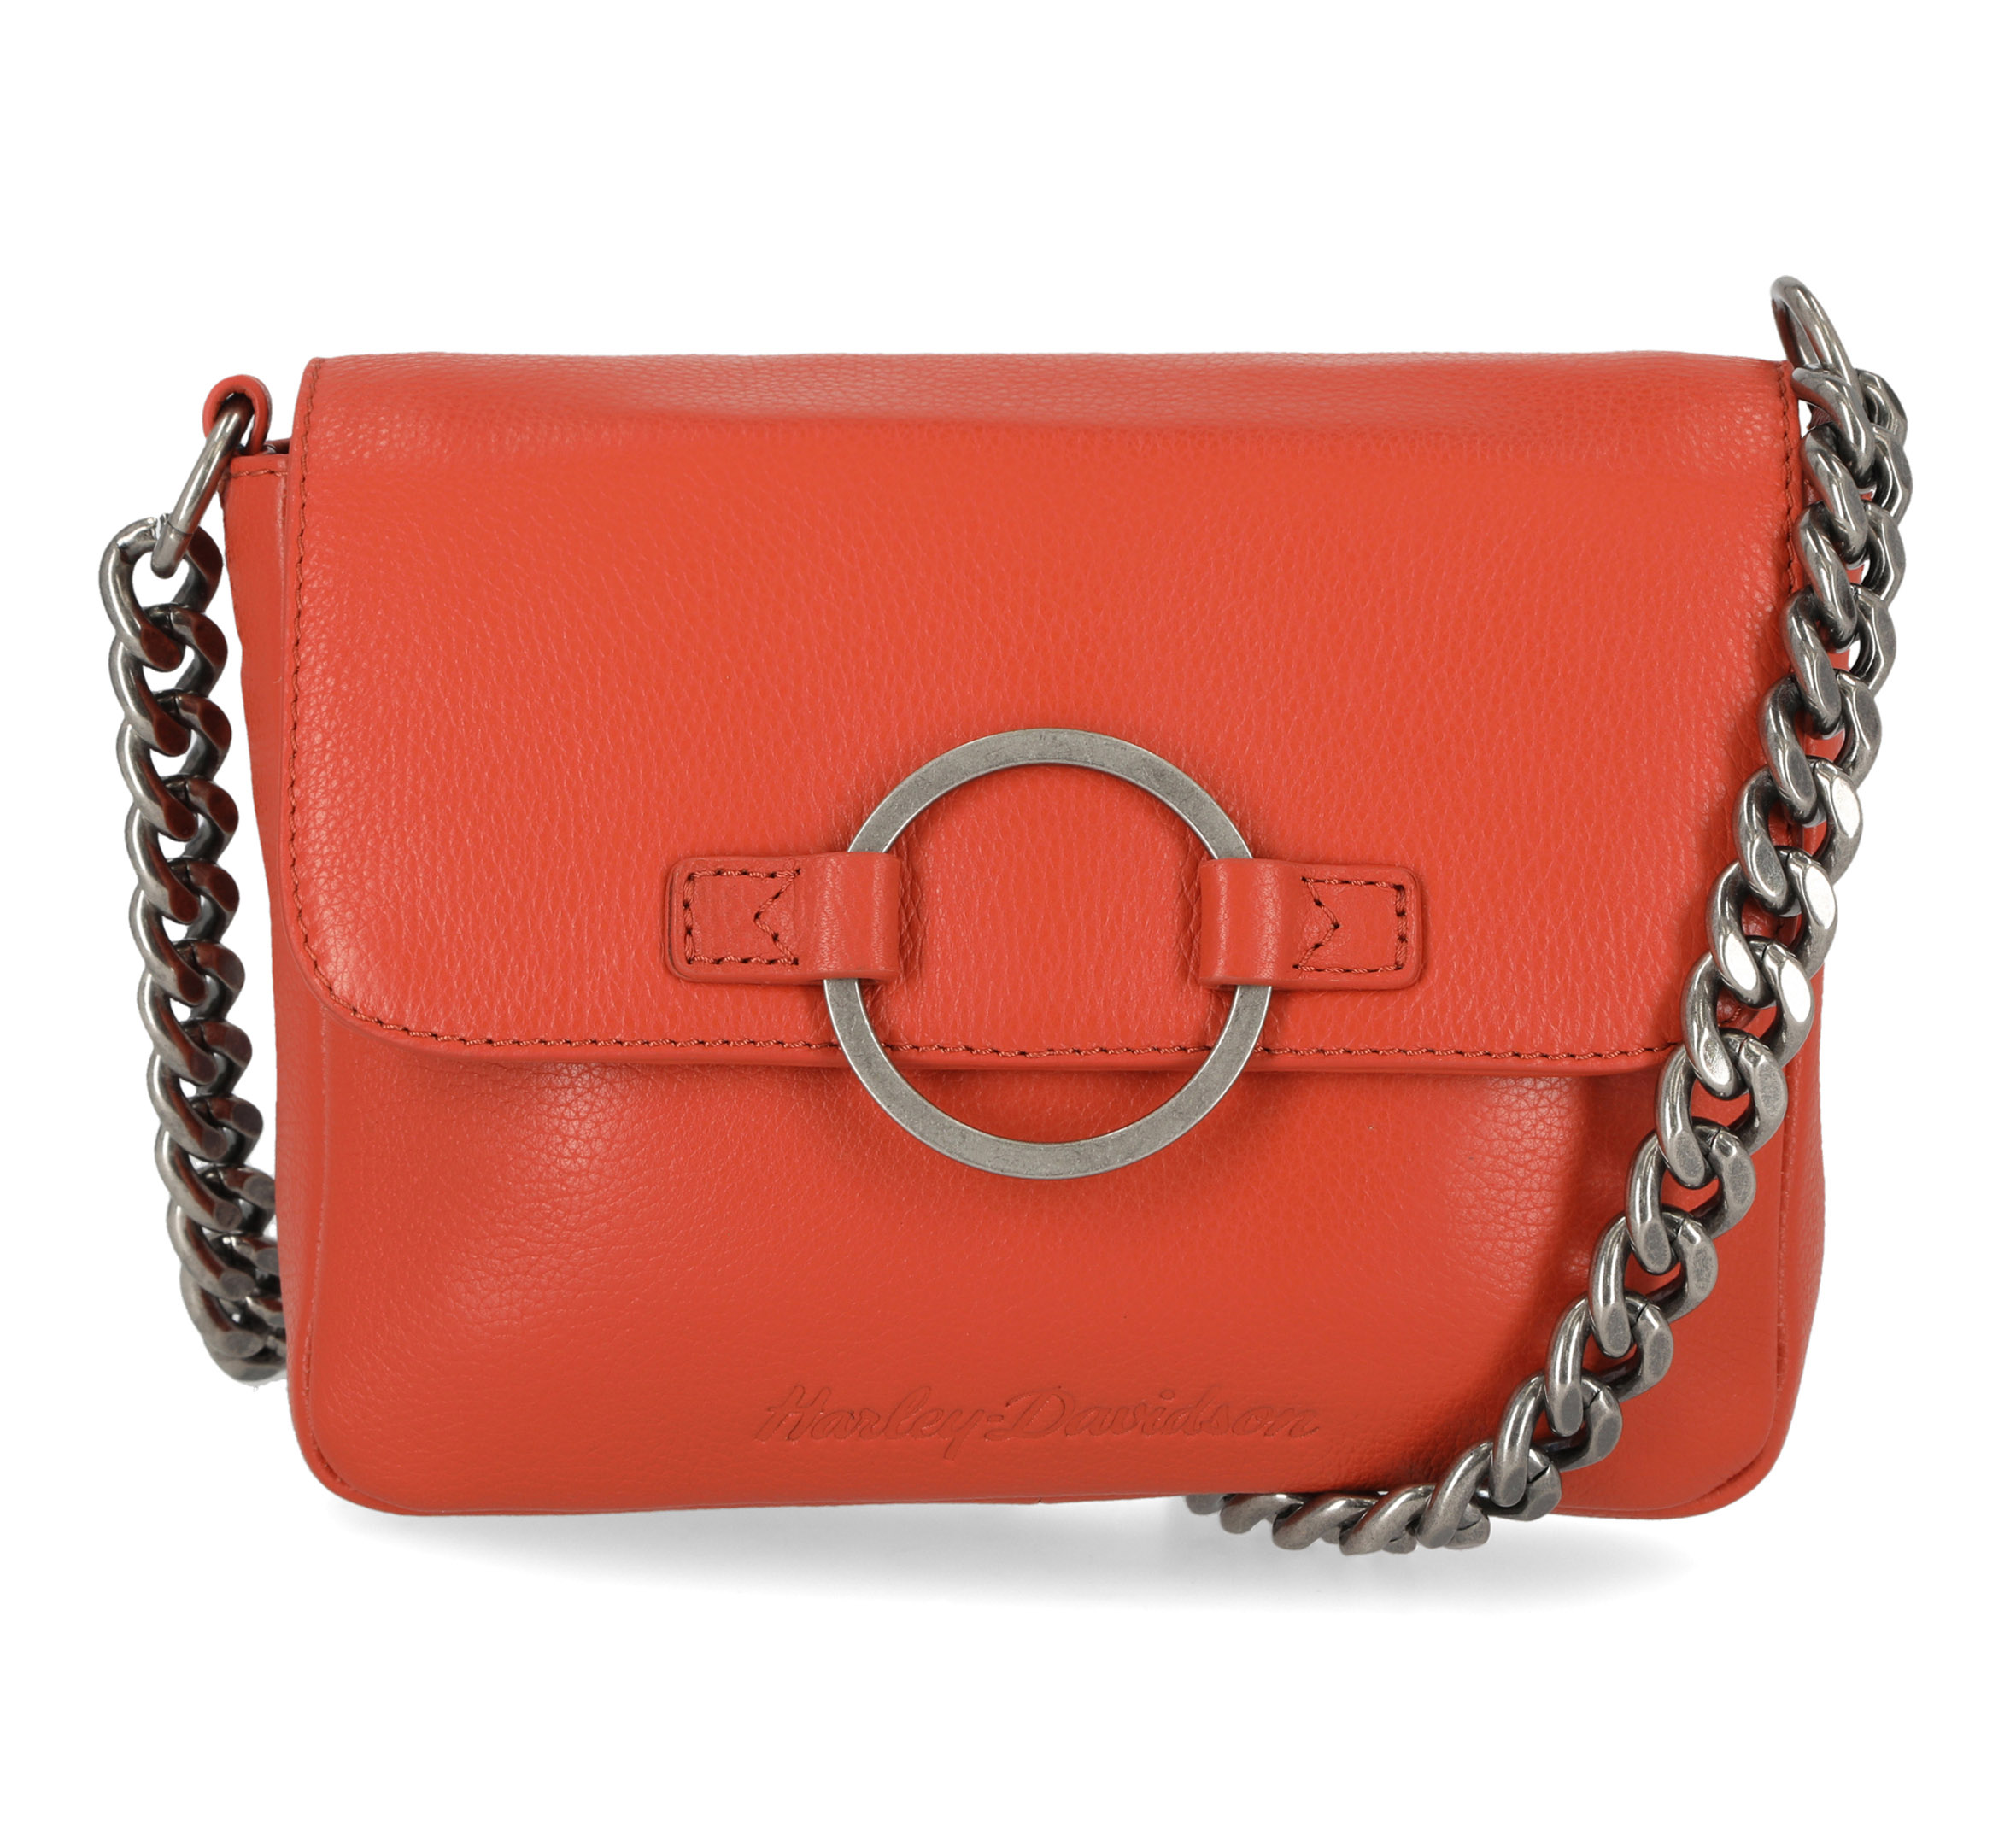 Women's Purses, Handbags & Stylish & Functional Bags | BONTON